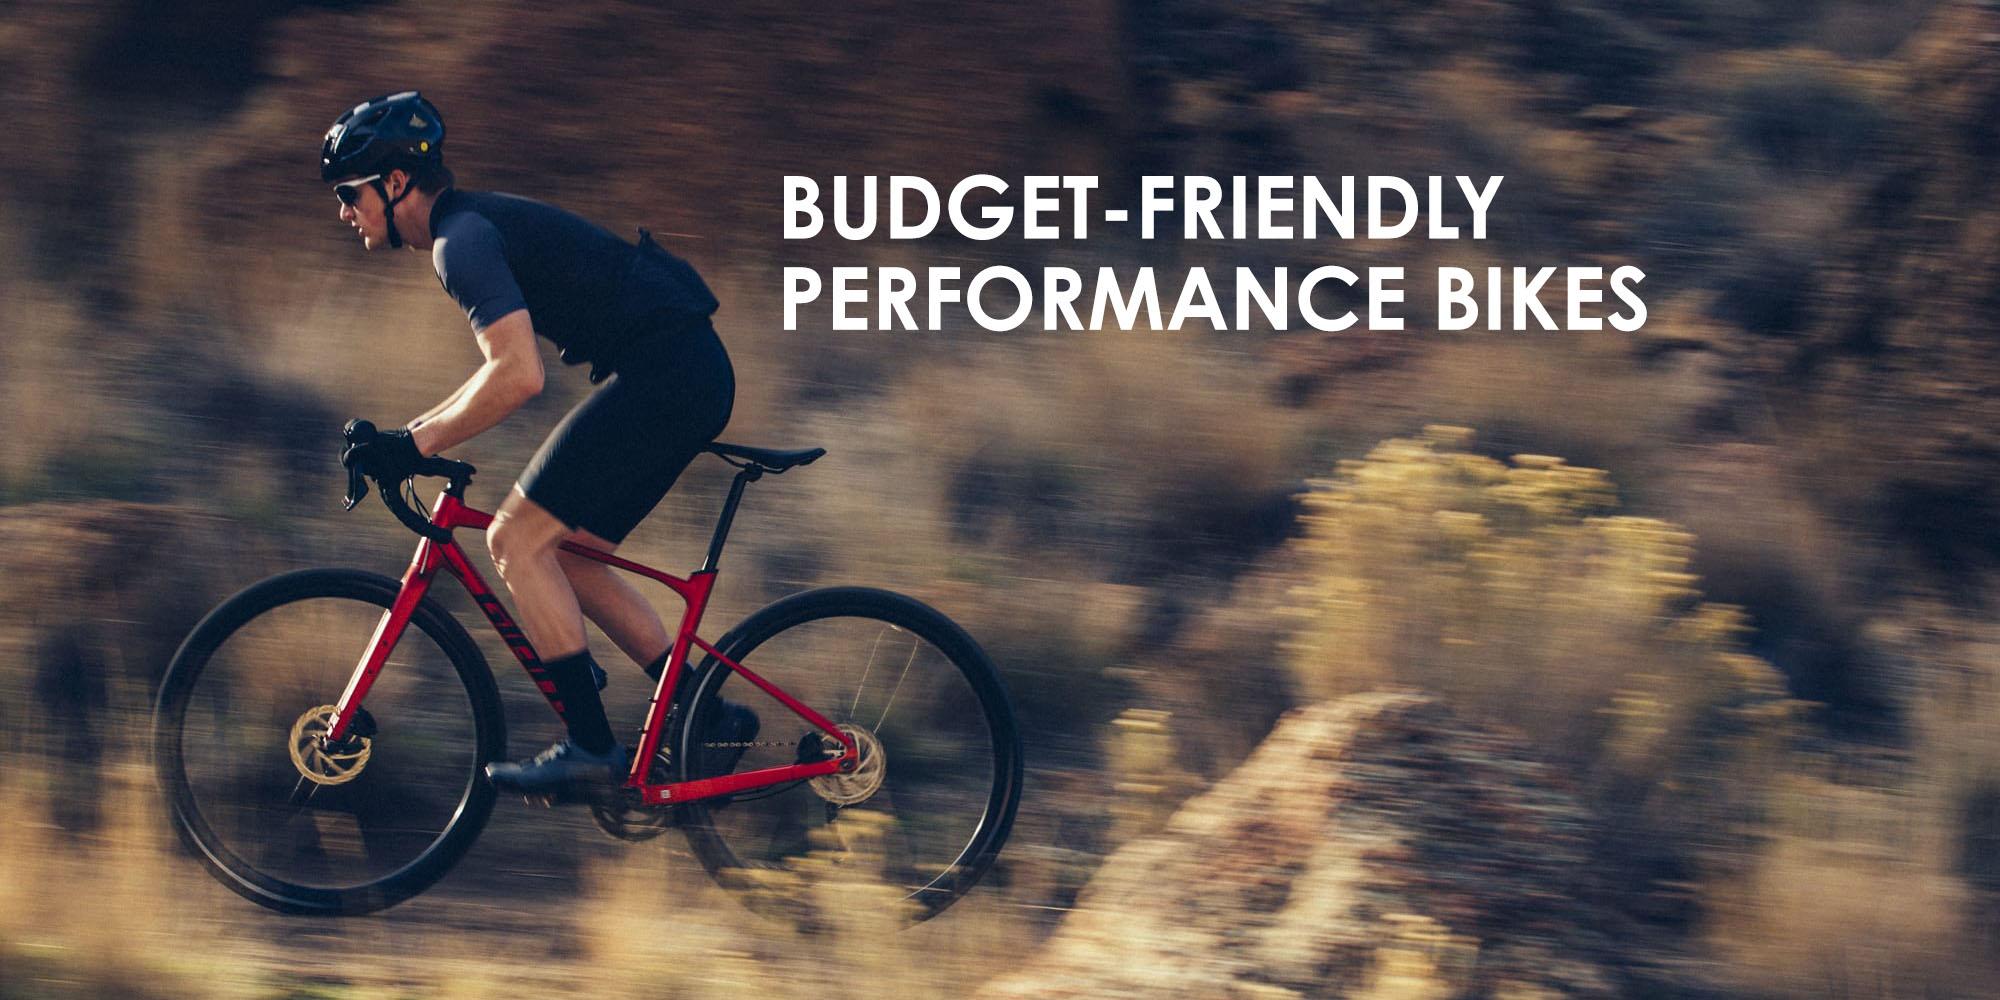 Budget-friendly performance bikes